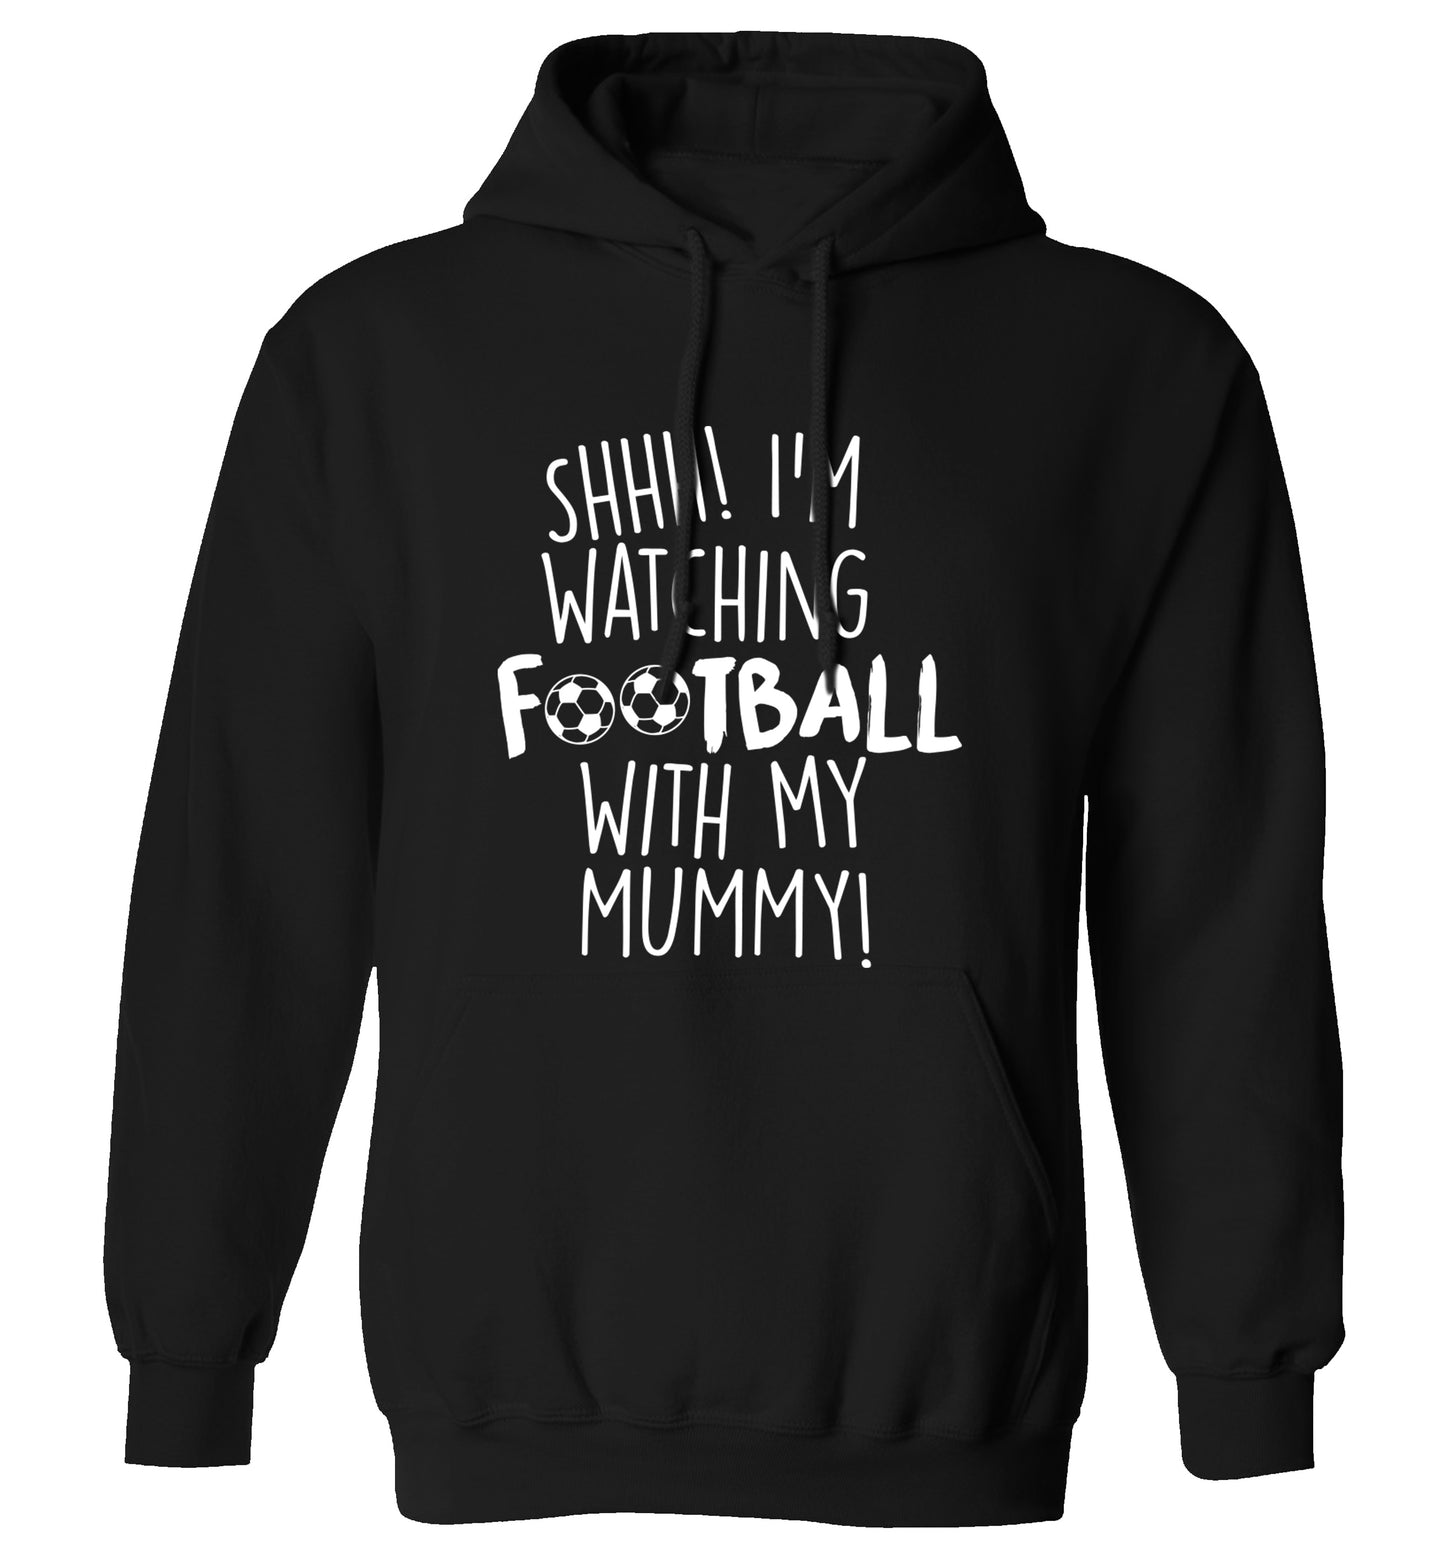 Shhh I'm watching football with my mummy adults unisexblack hoodie 2XL